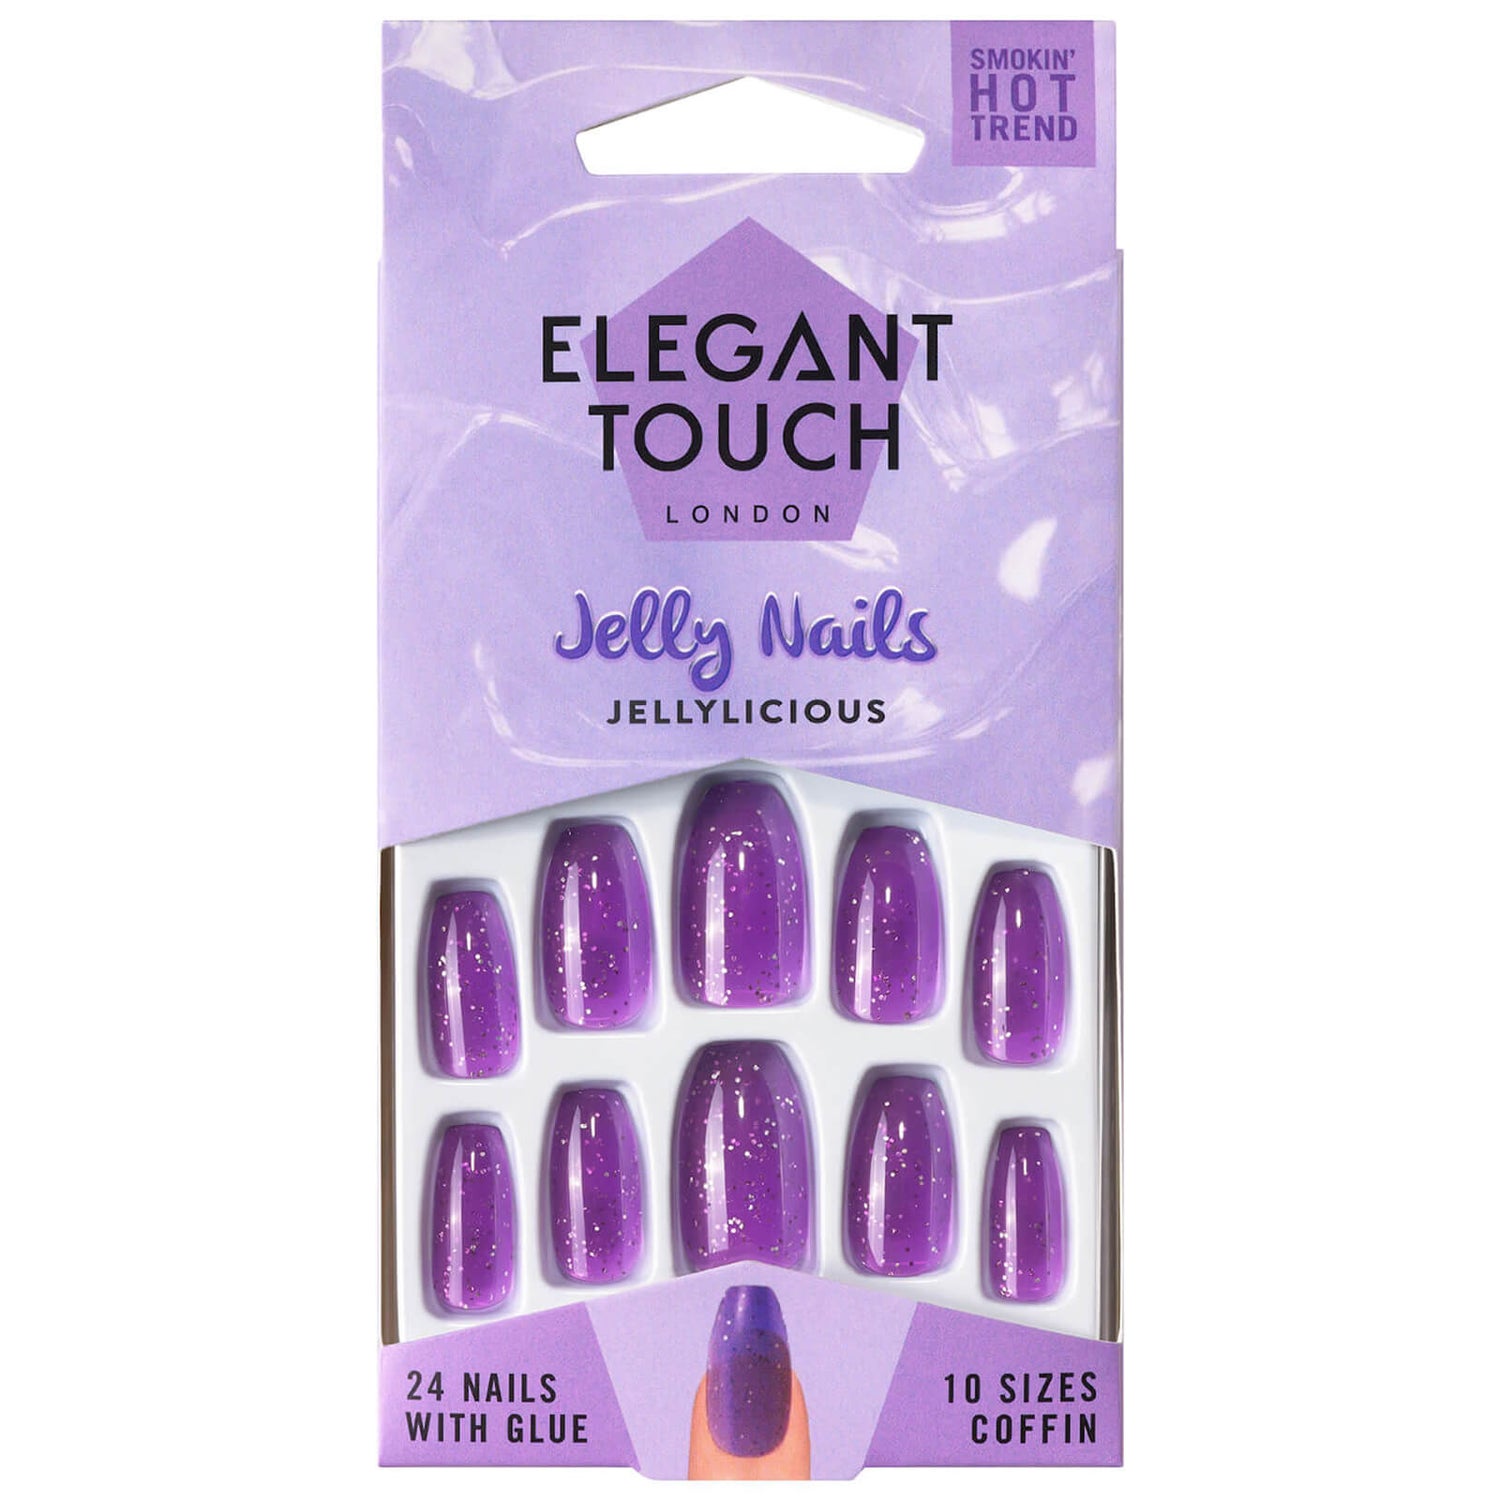 Накладные ногти Elegant Touch Jelly Nails, оттенок Jellyliscious